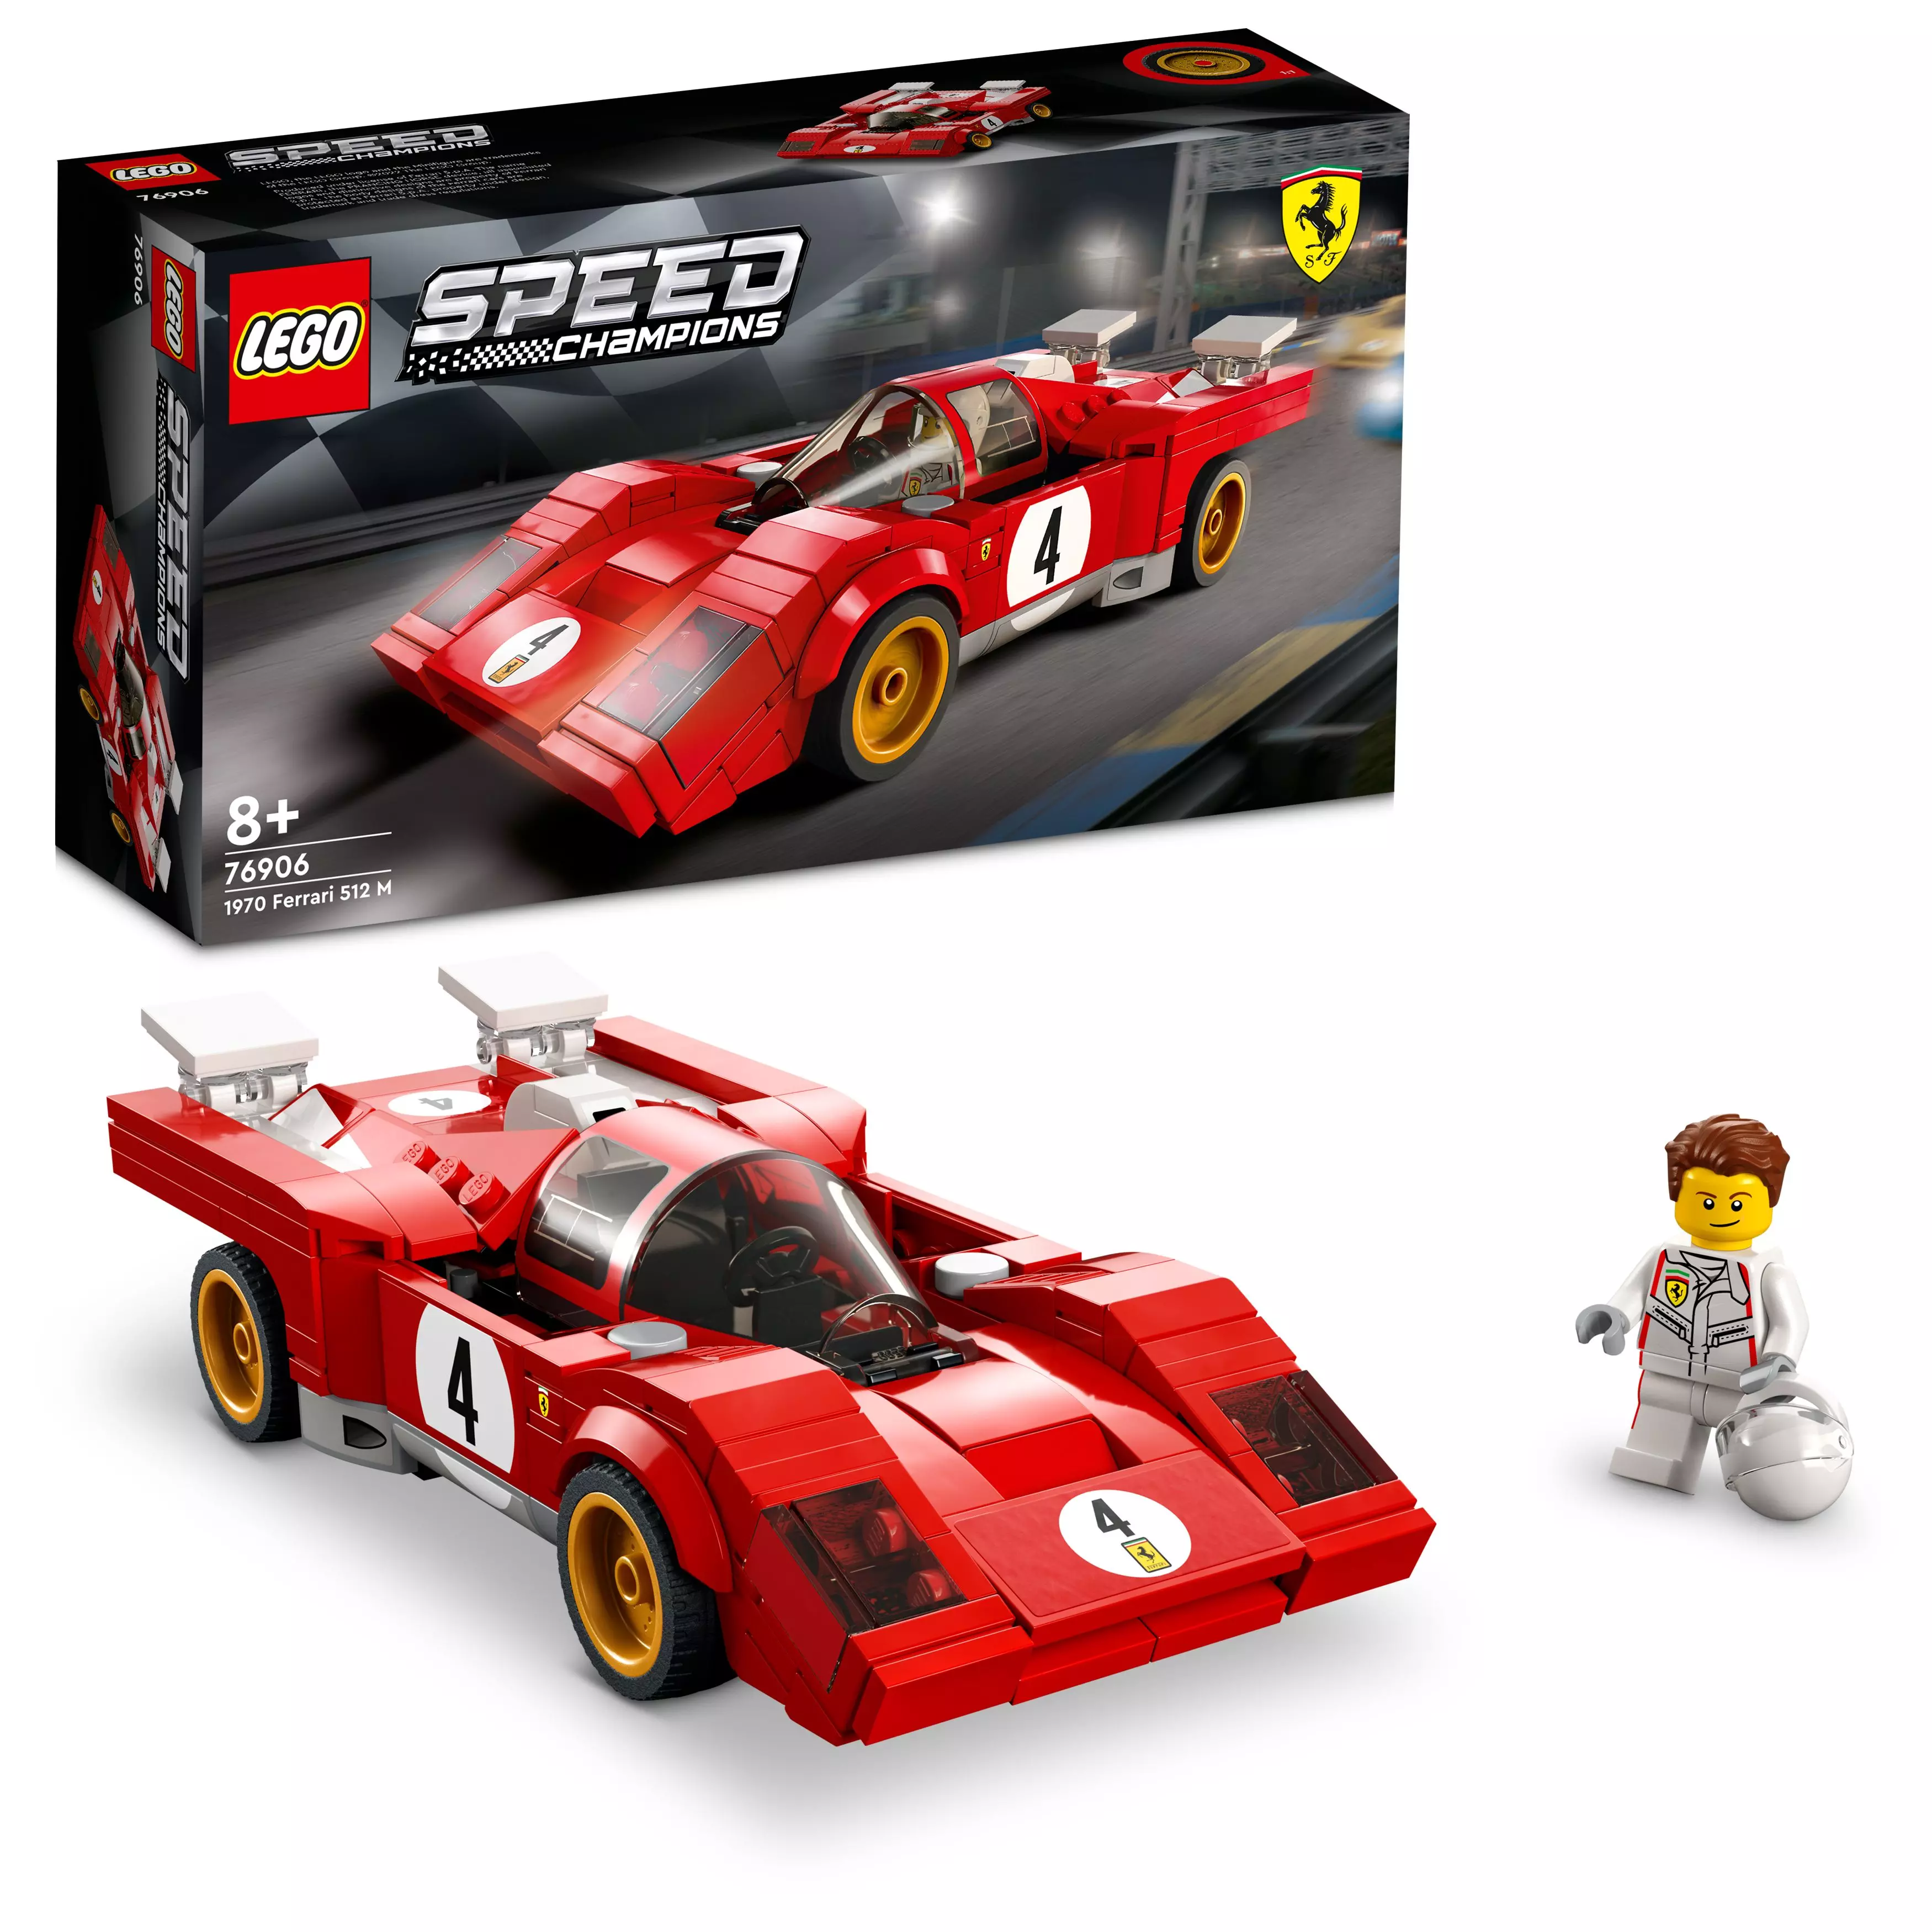 Lego Speed Champions 1970 Ferrari M